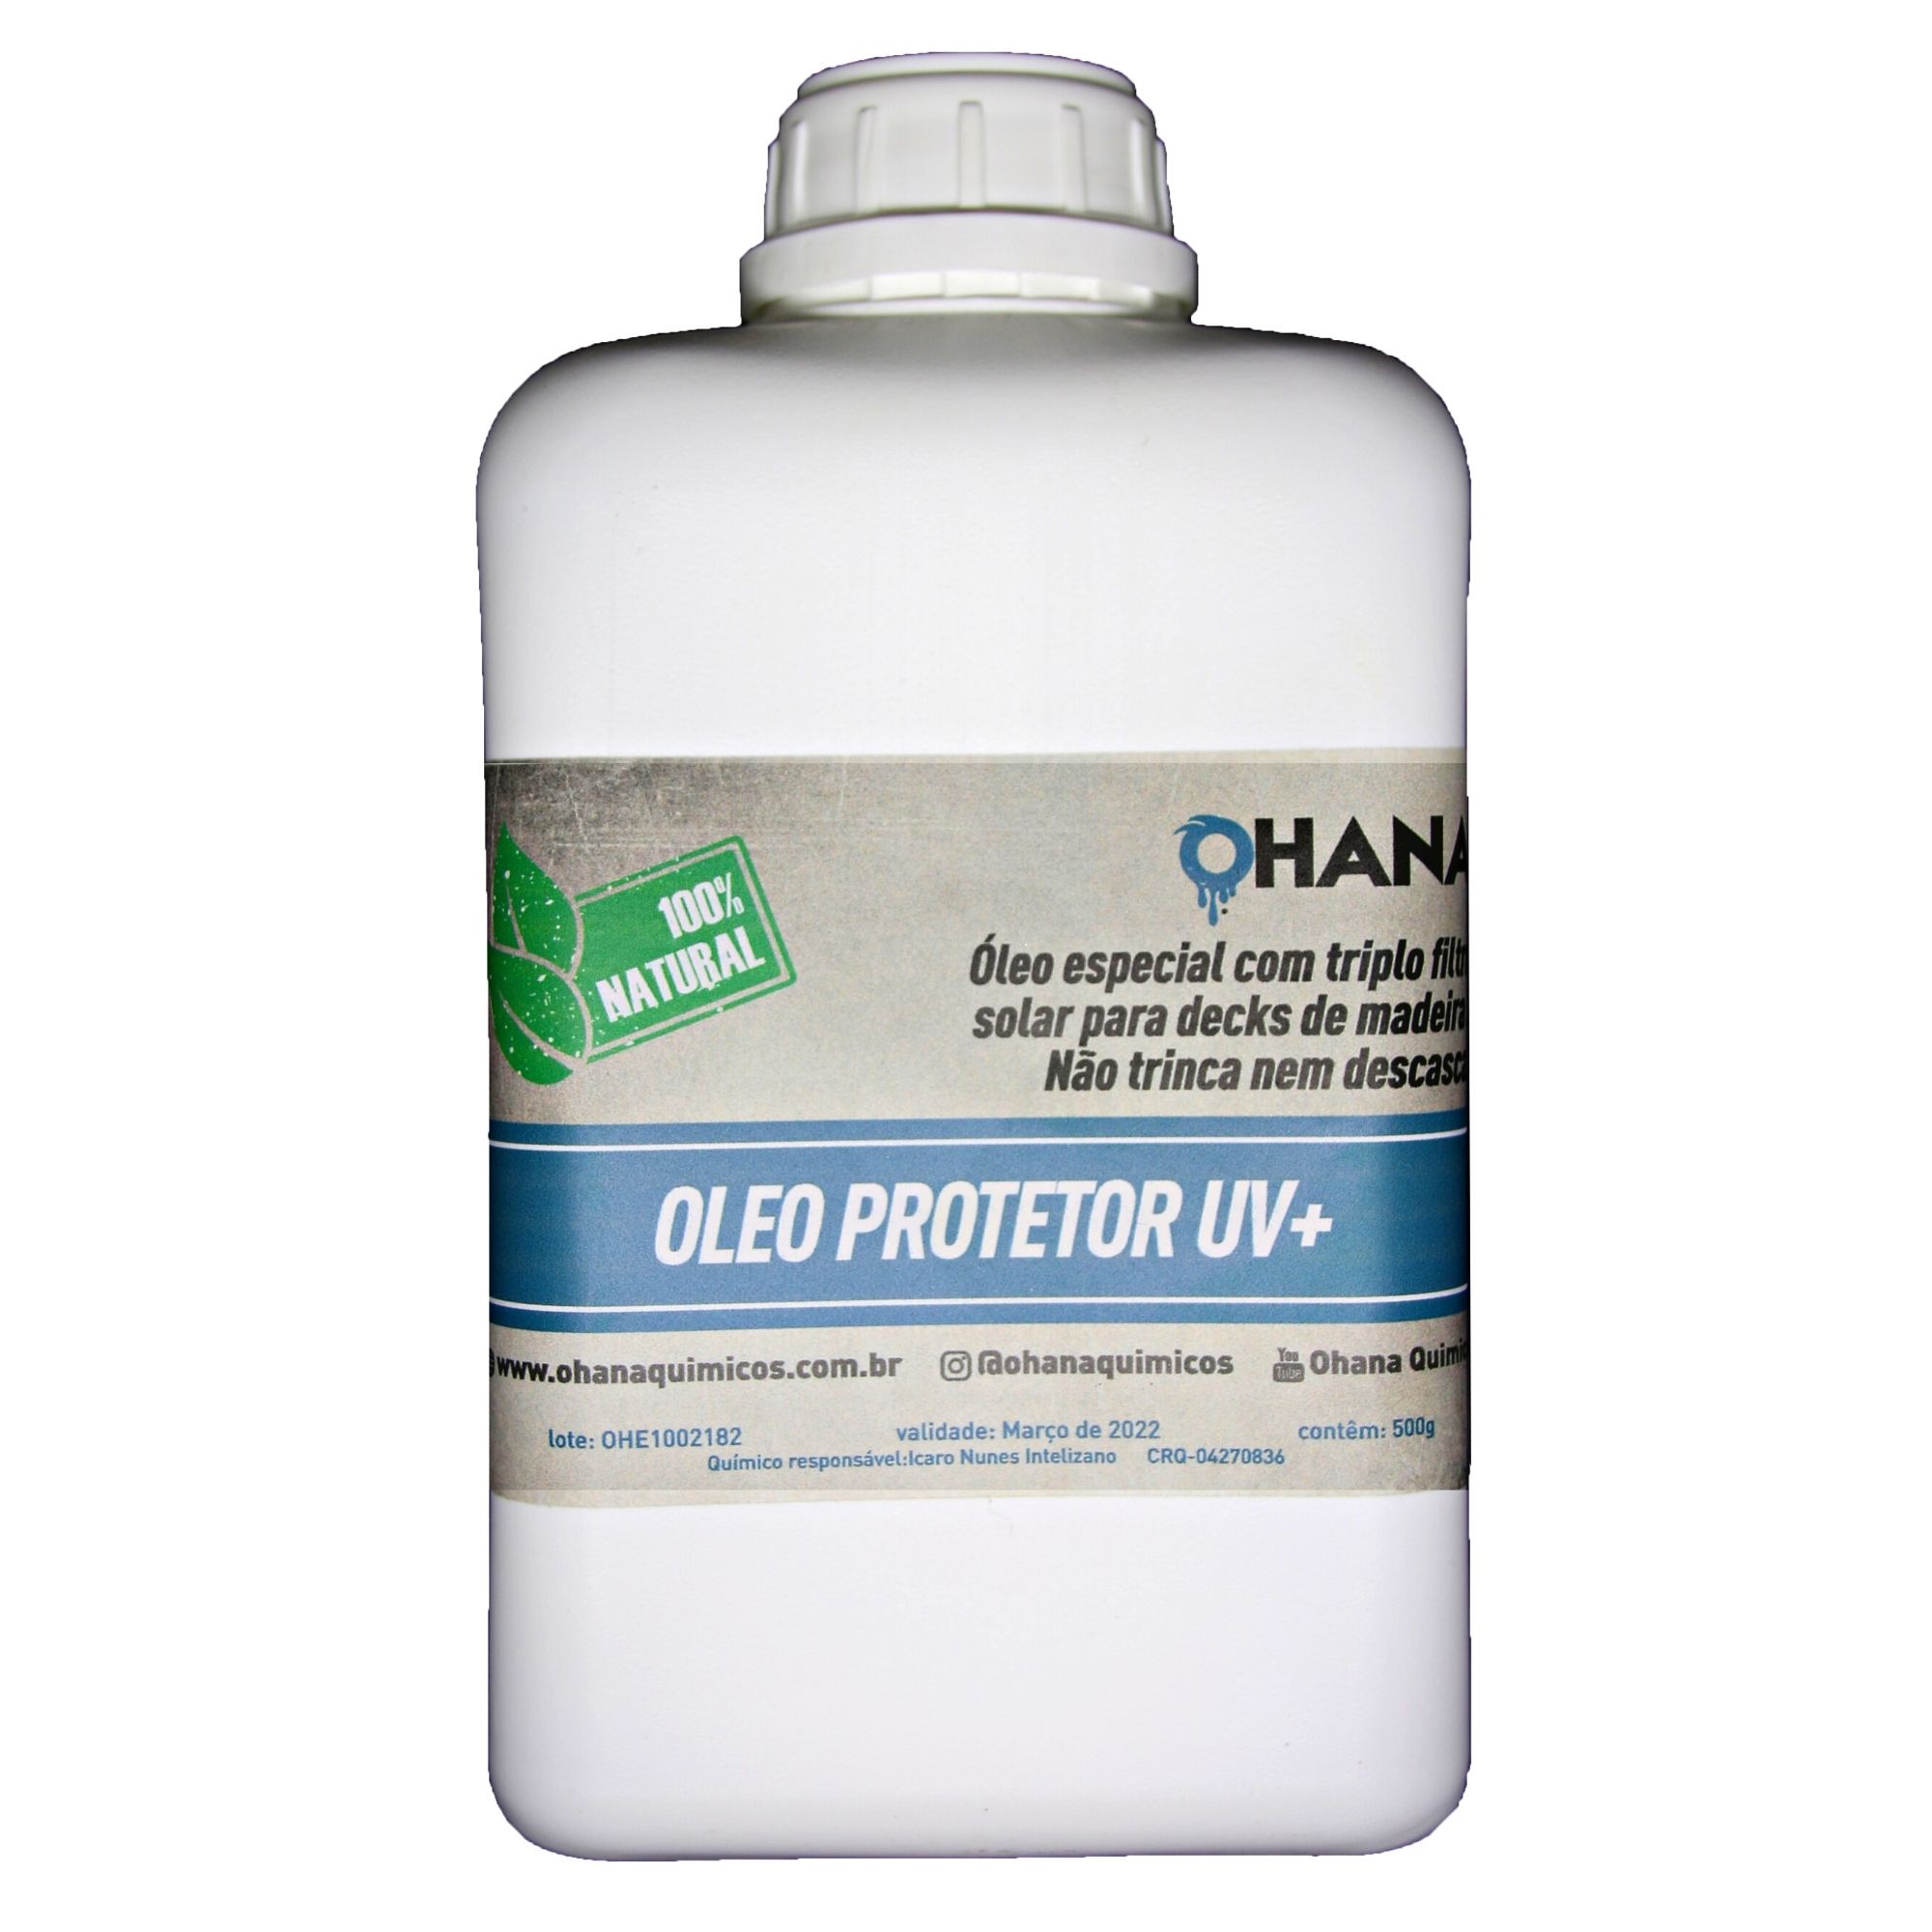 Oleo Protetor UV+  - 1 KG